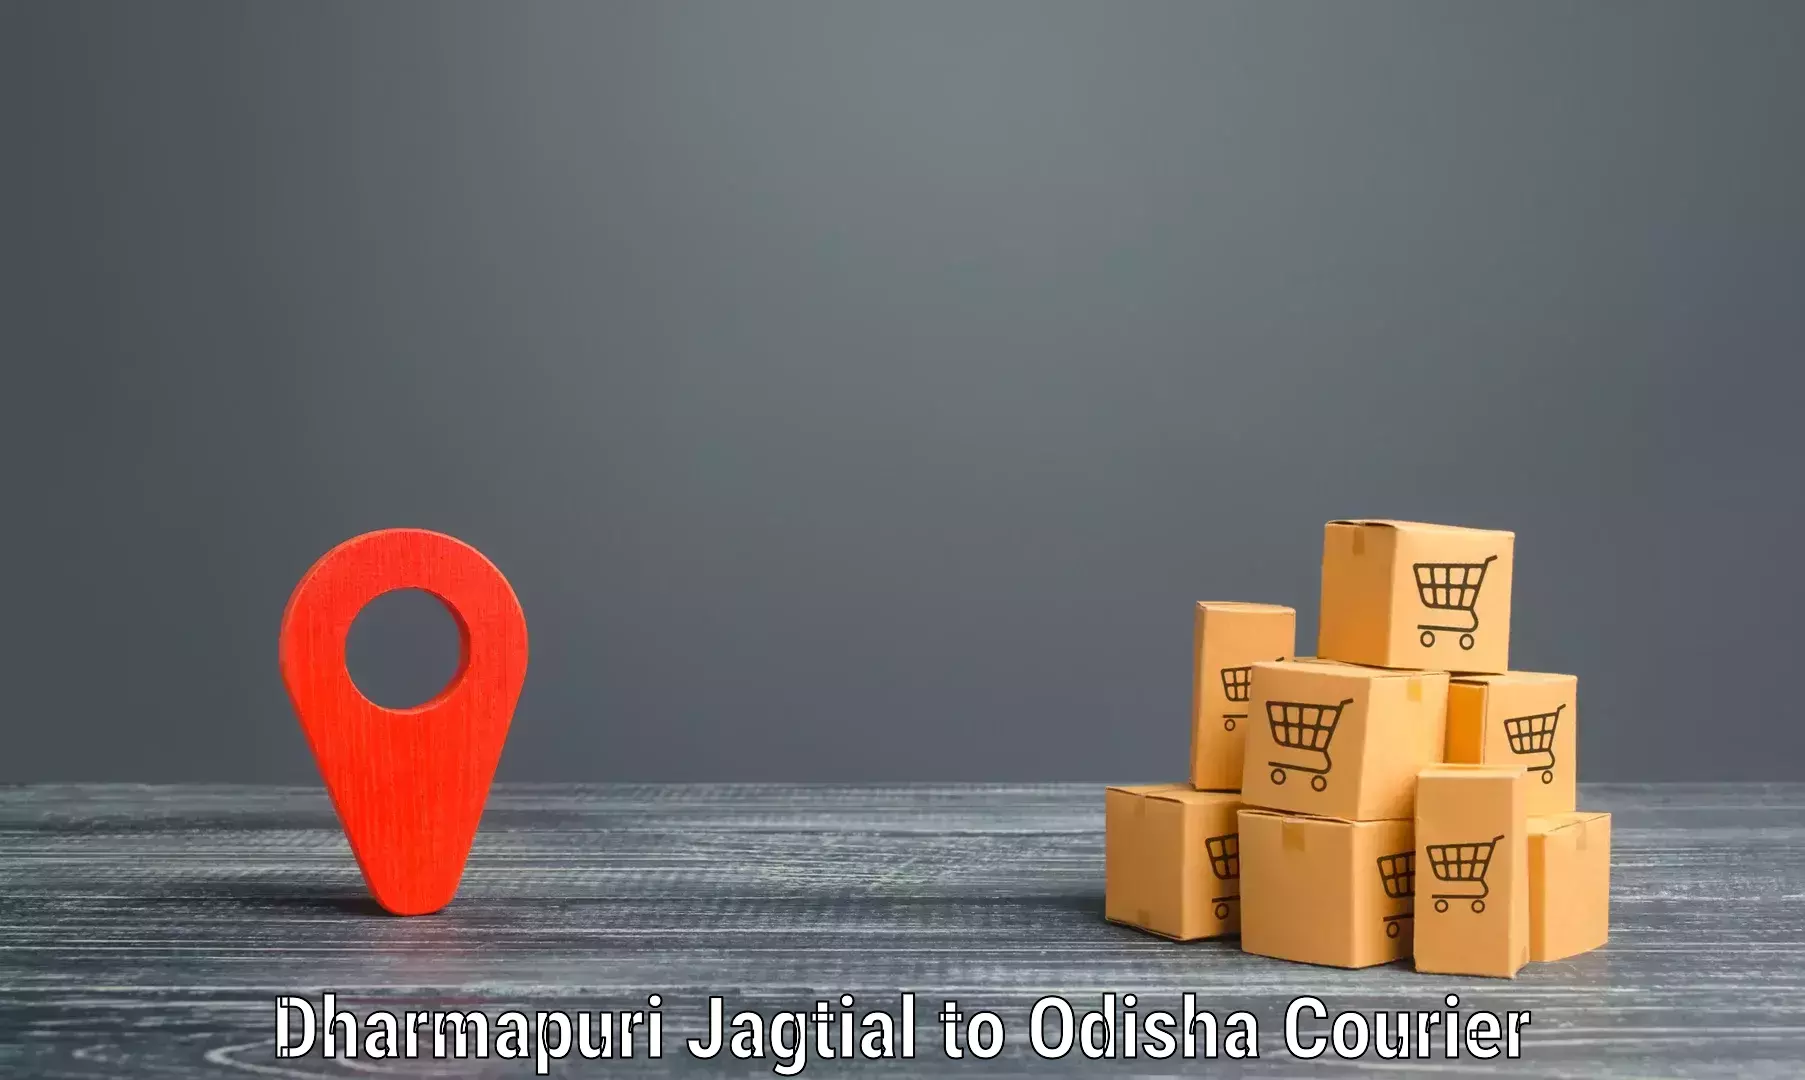 Cash on delivery service Dharmapuri Jagtial to Galleri